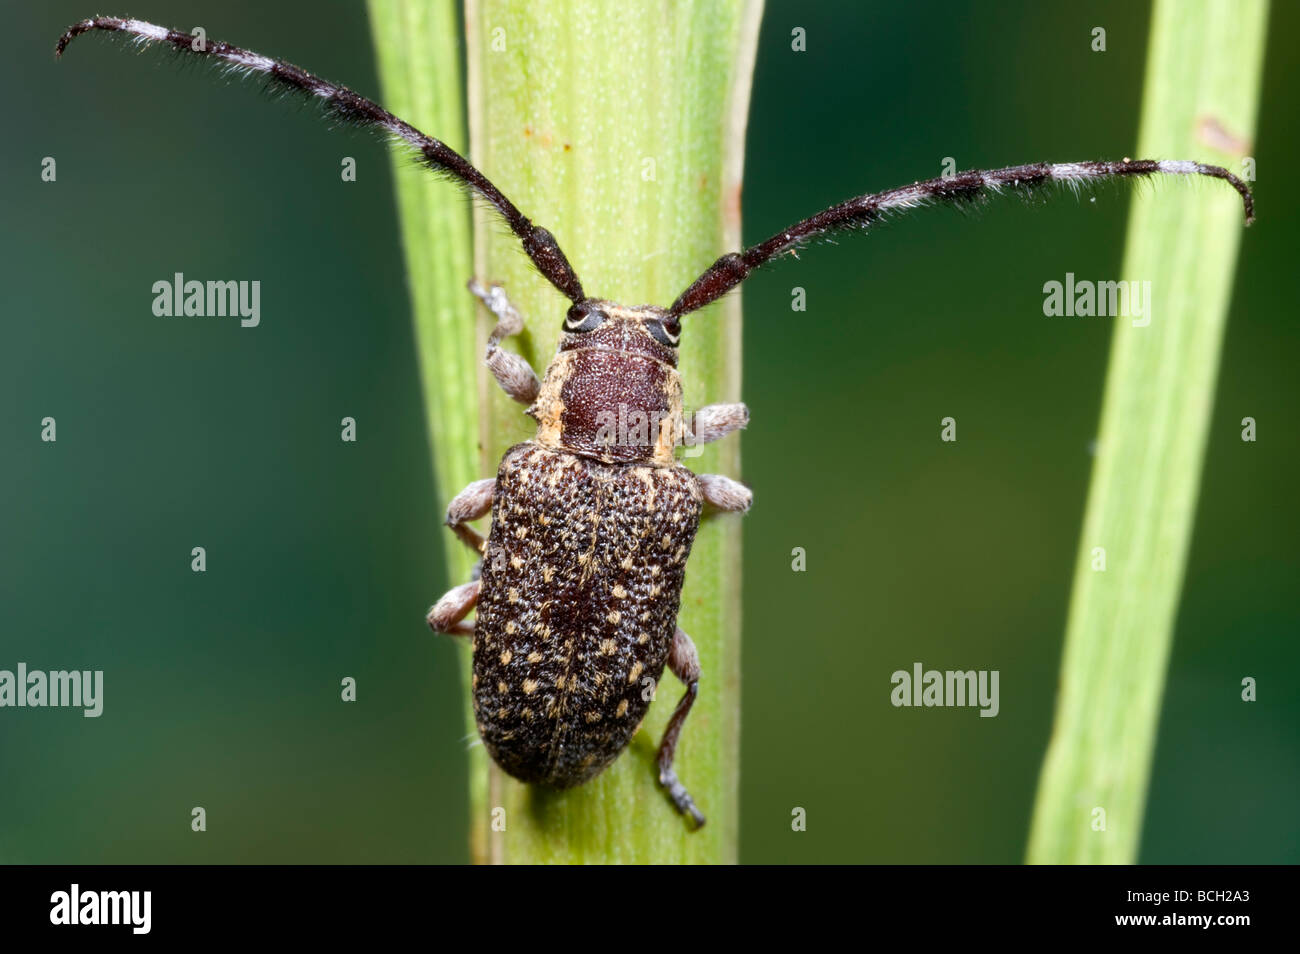 Austrlain longhorned or longicorn beetle Stock Photo